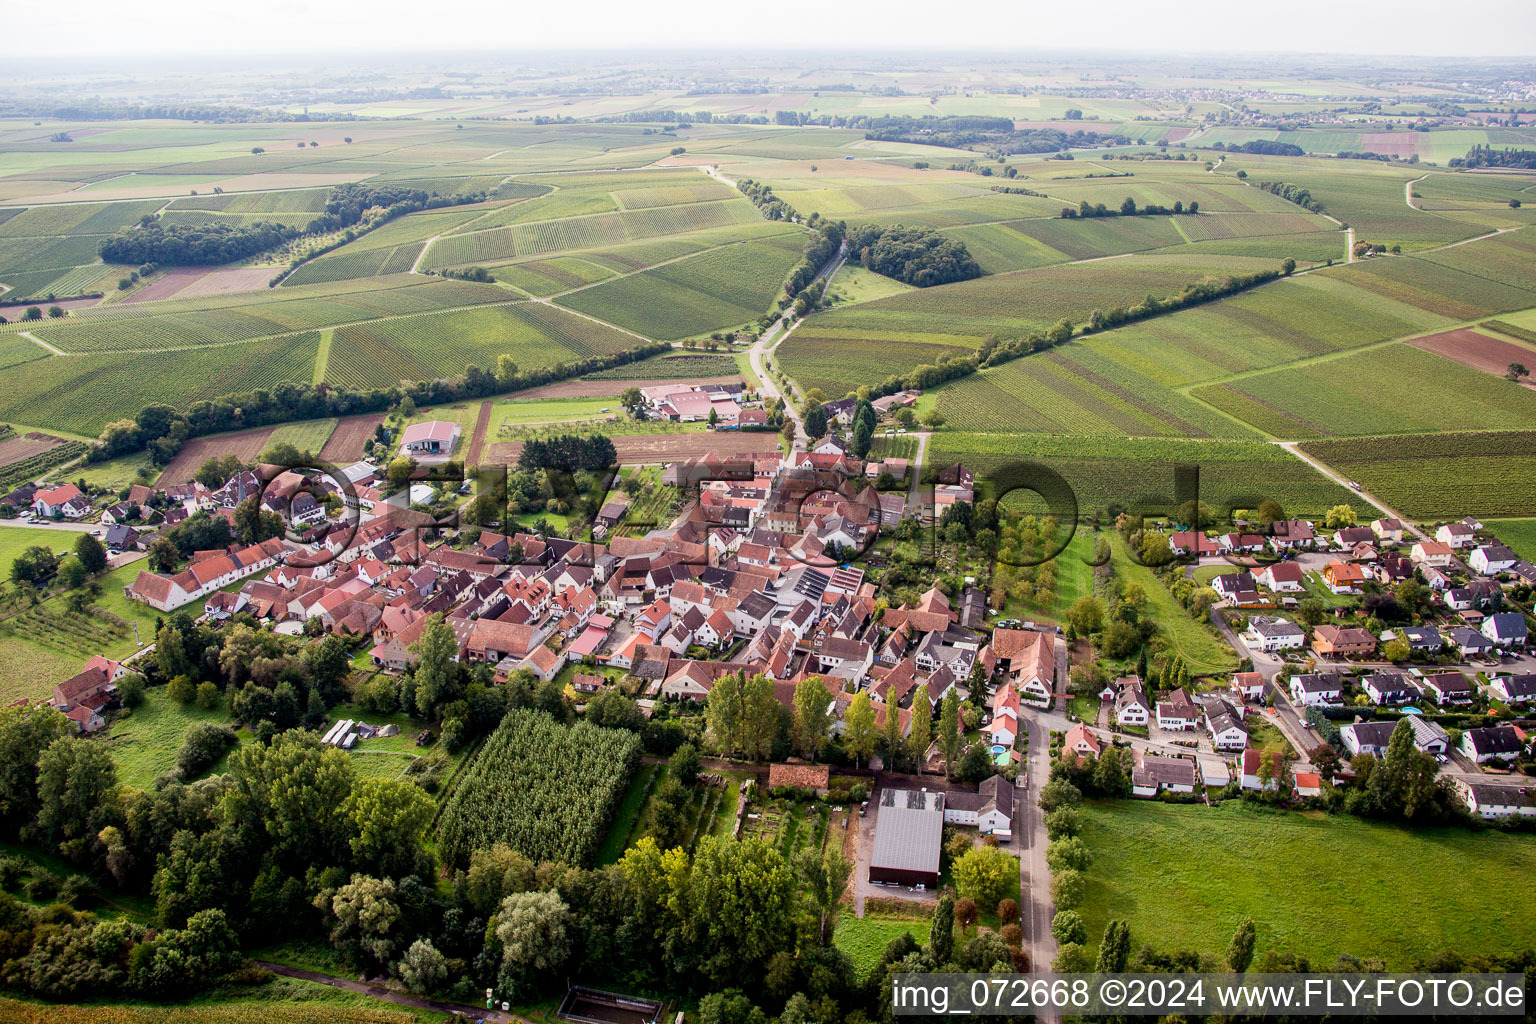 Village - view on the edge of agricultural fields and farmland in the district Klingen in Heuchelheim-Klingen in the state Rhineland-Palatinate, Germany